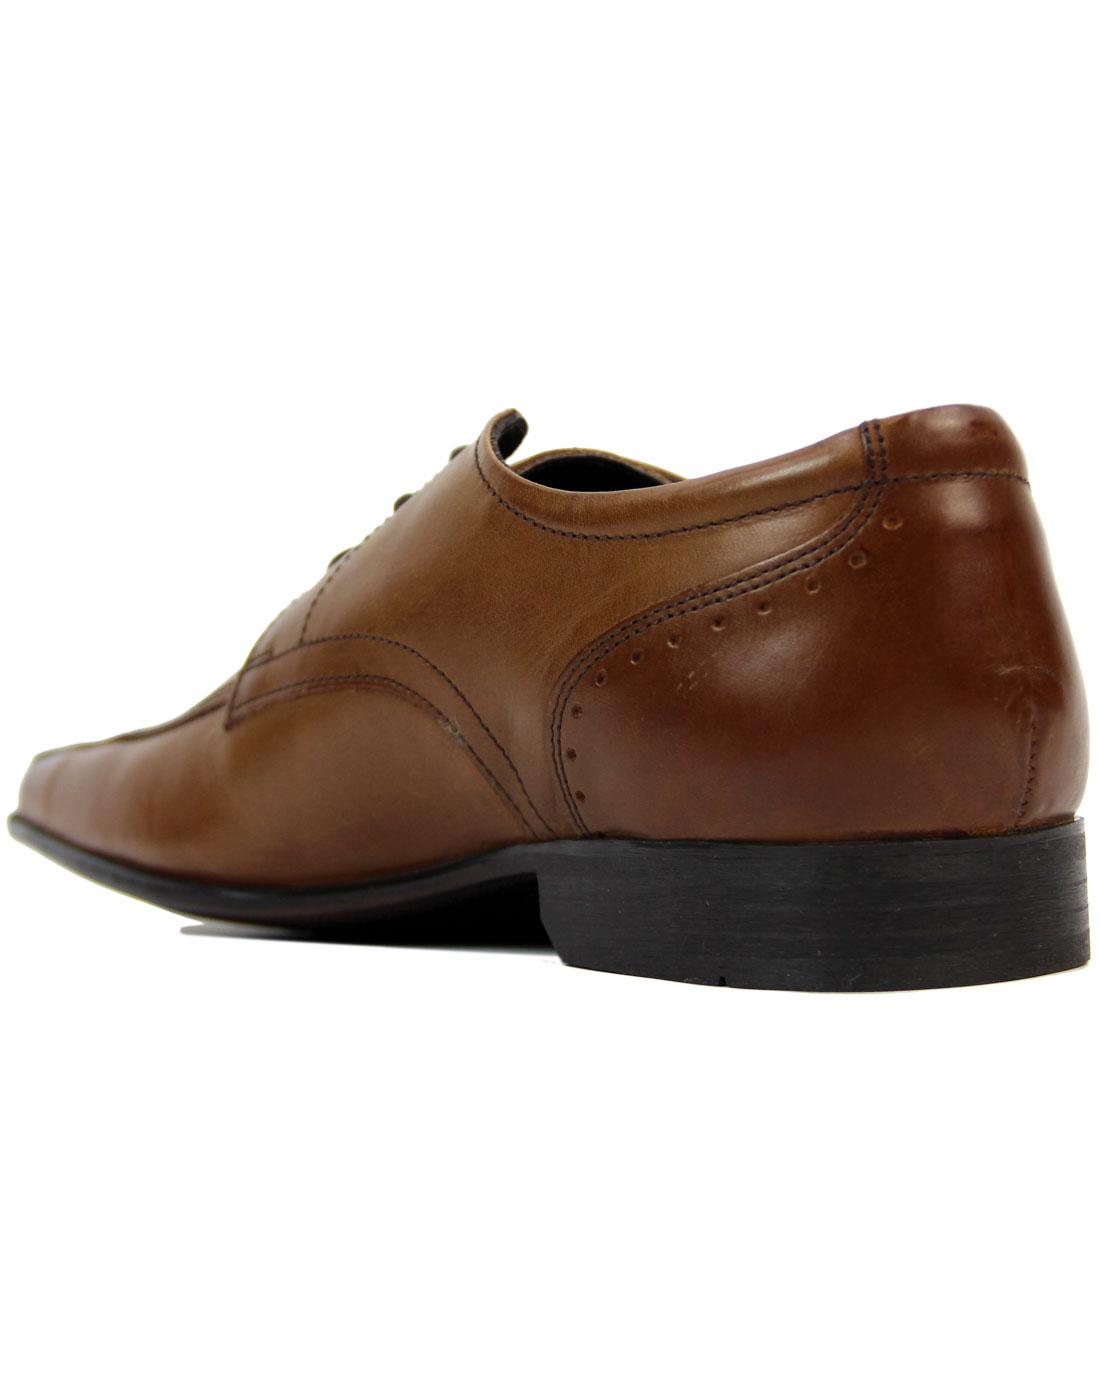 IKON Fraser Men's Retro 60s Mod Leather Chisel Toe Shoes in Tan